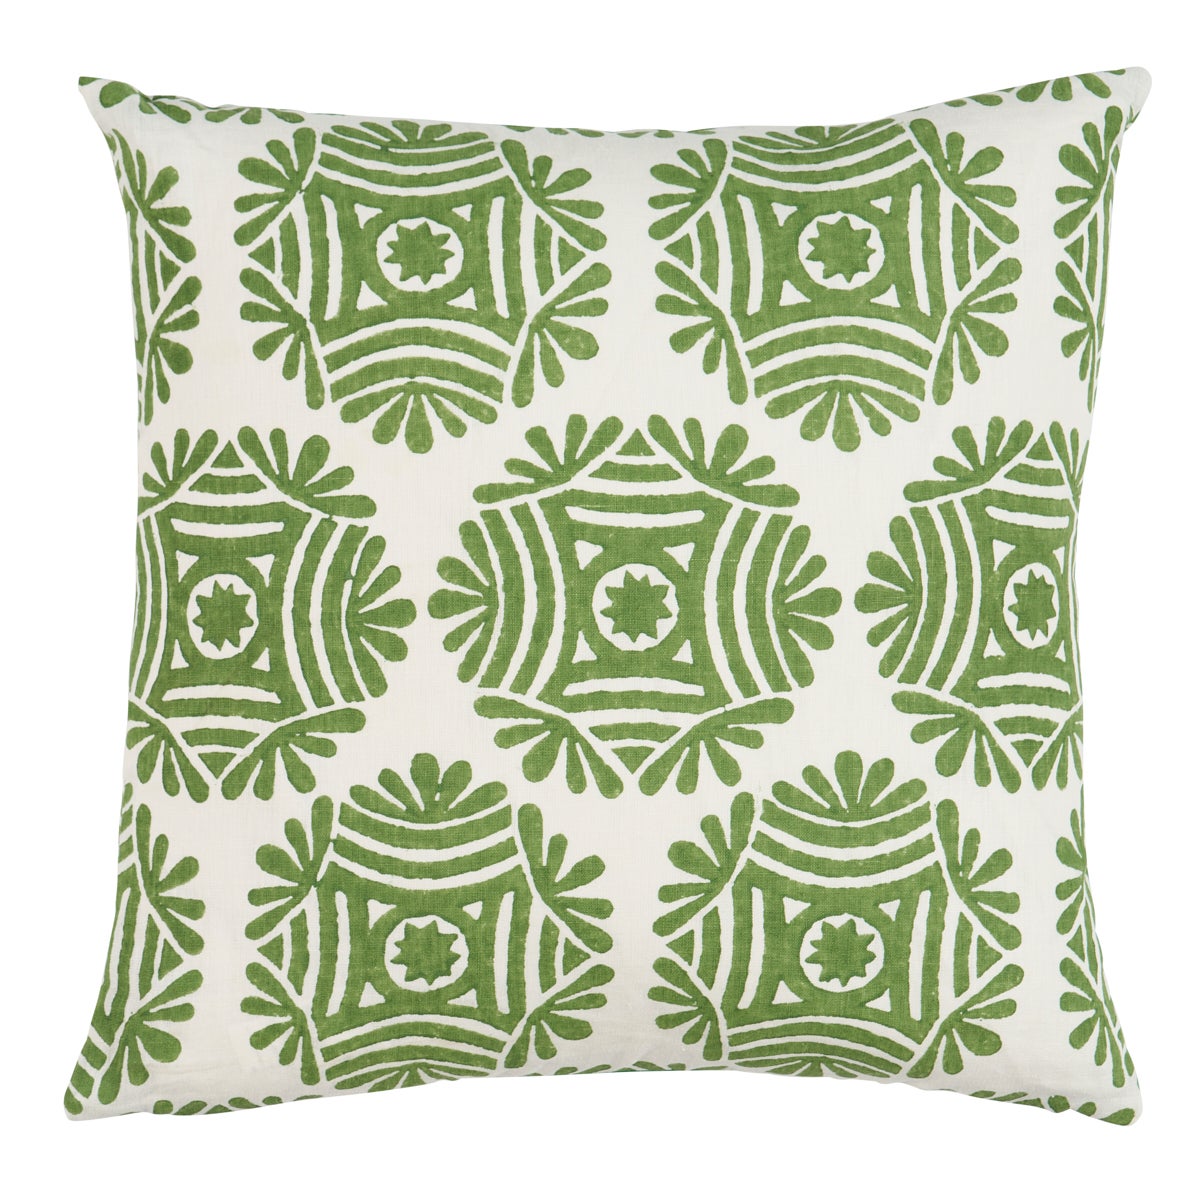 Gilded Star Block Print Pillow in Green, 20"